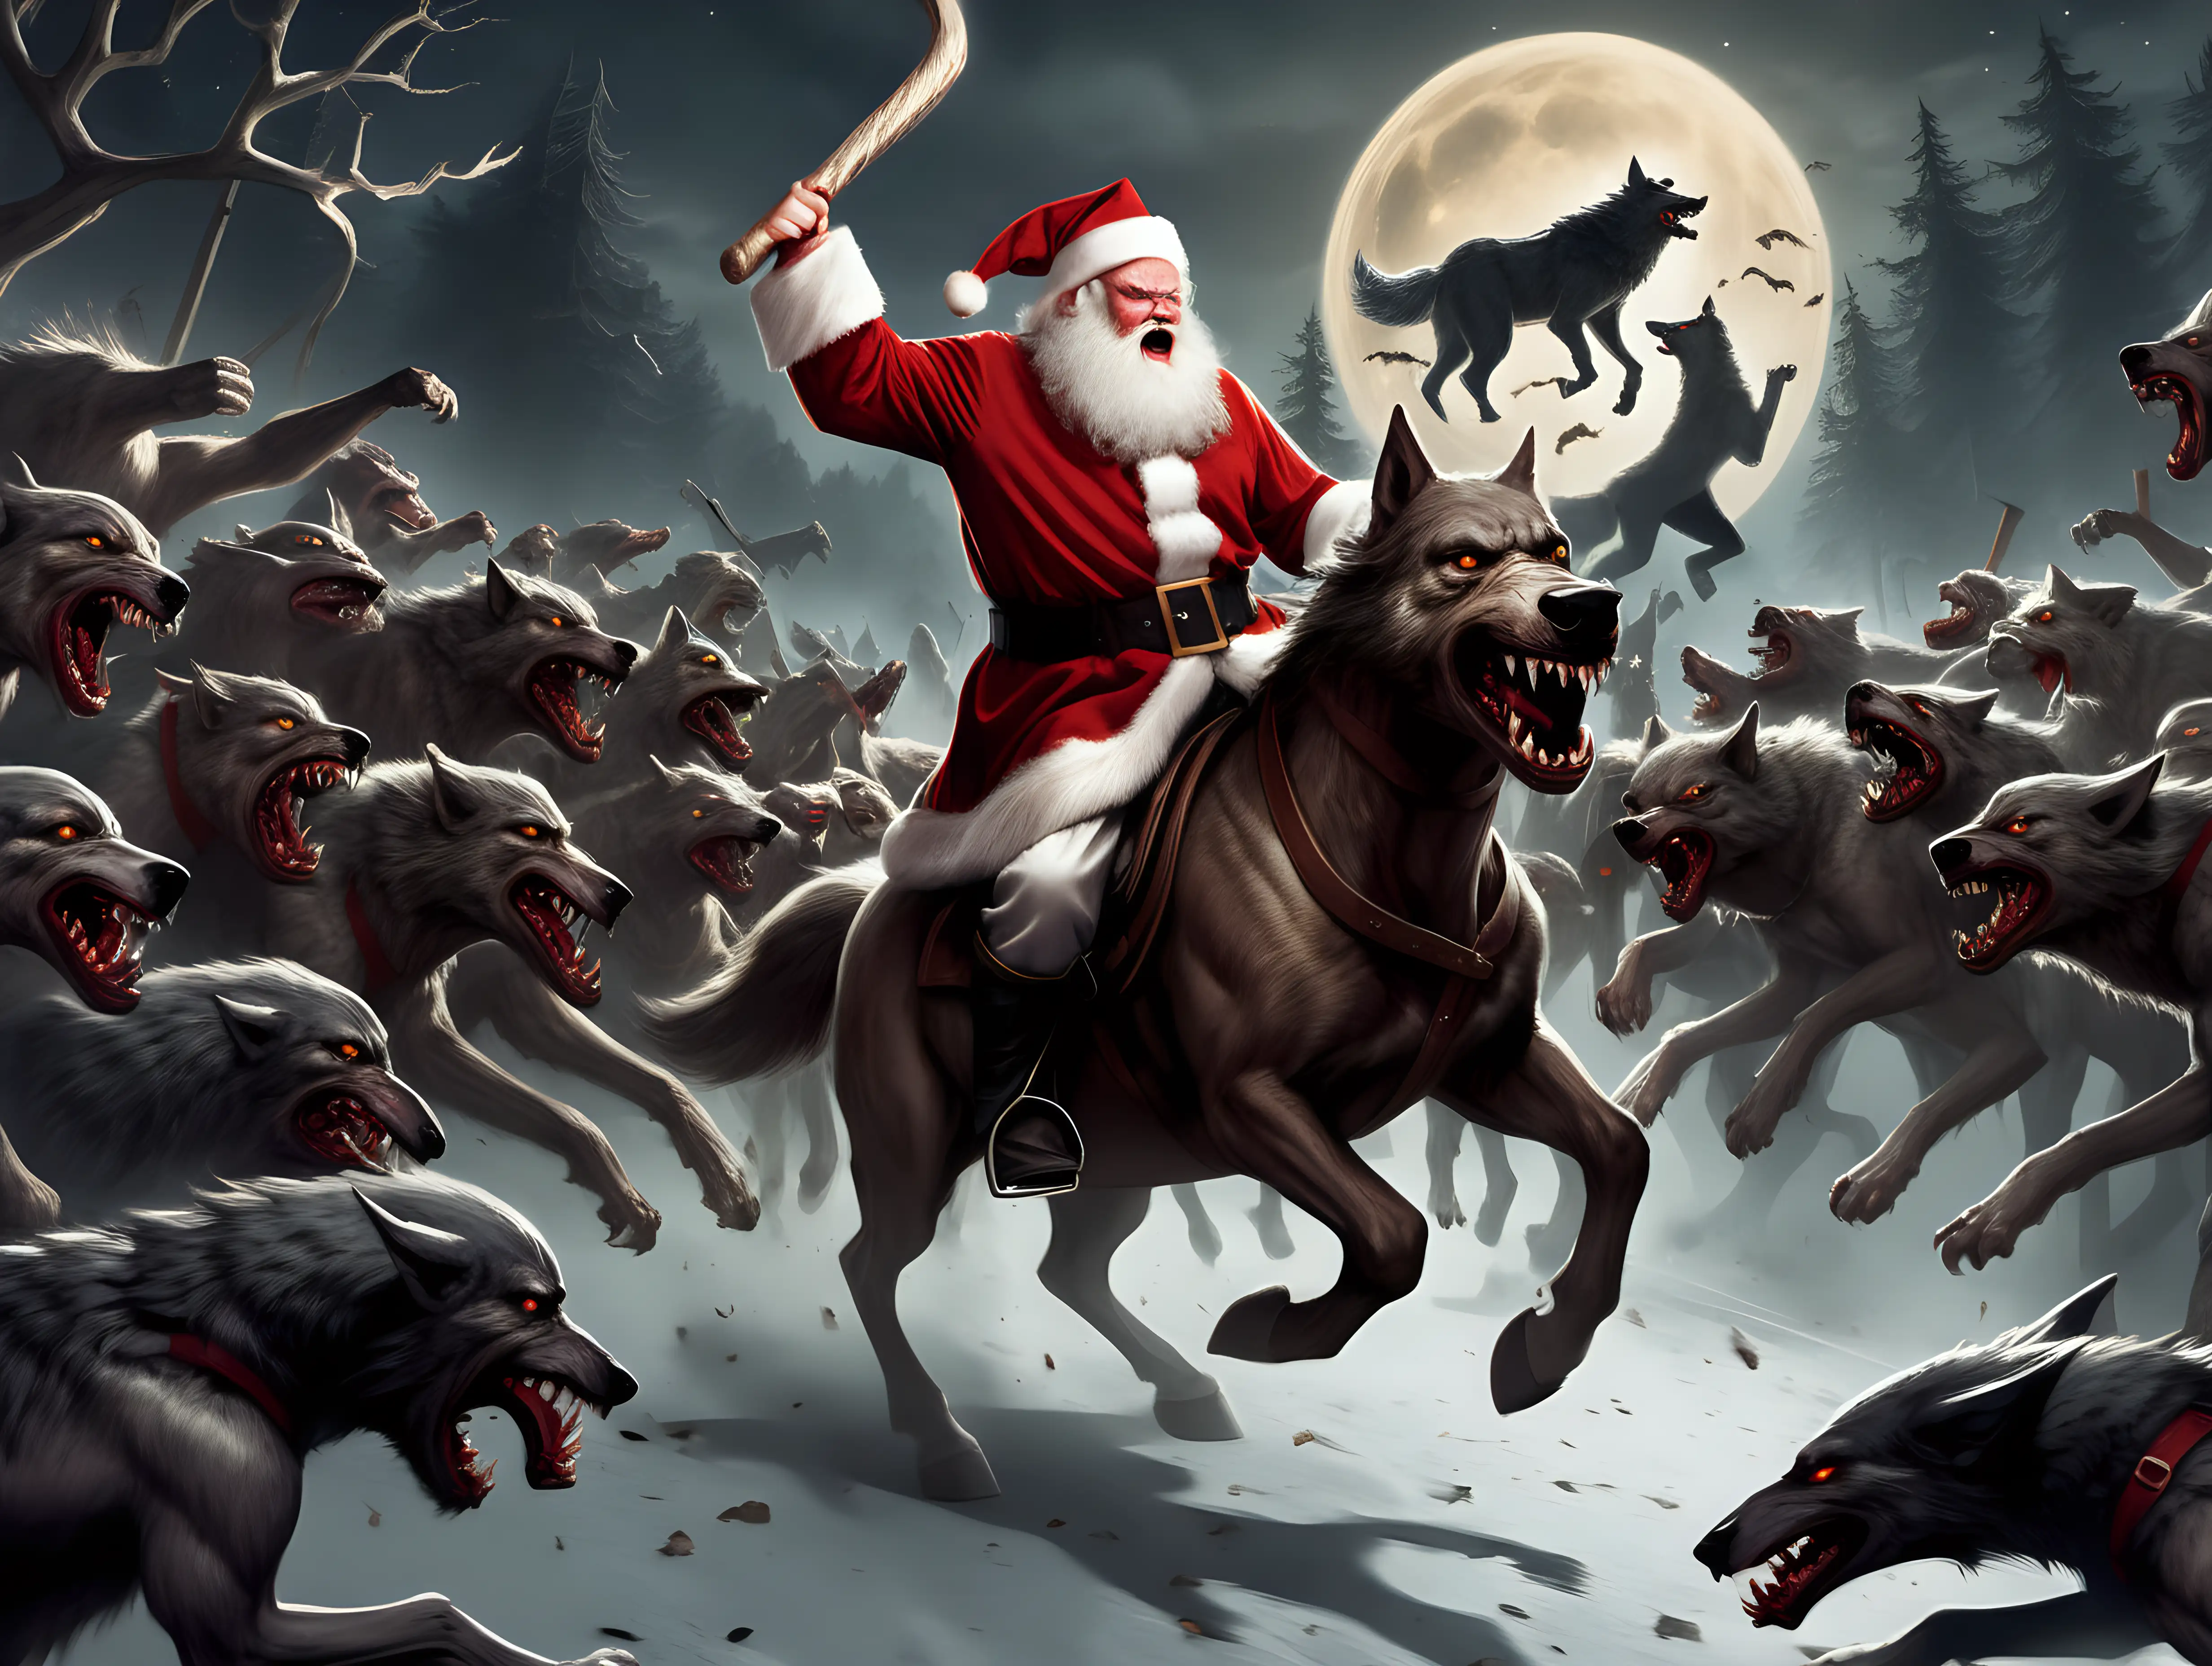 Legendary Battle Kris Kringle Confronts Werewolf Horde on Horseback